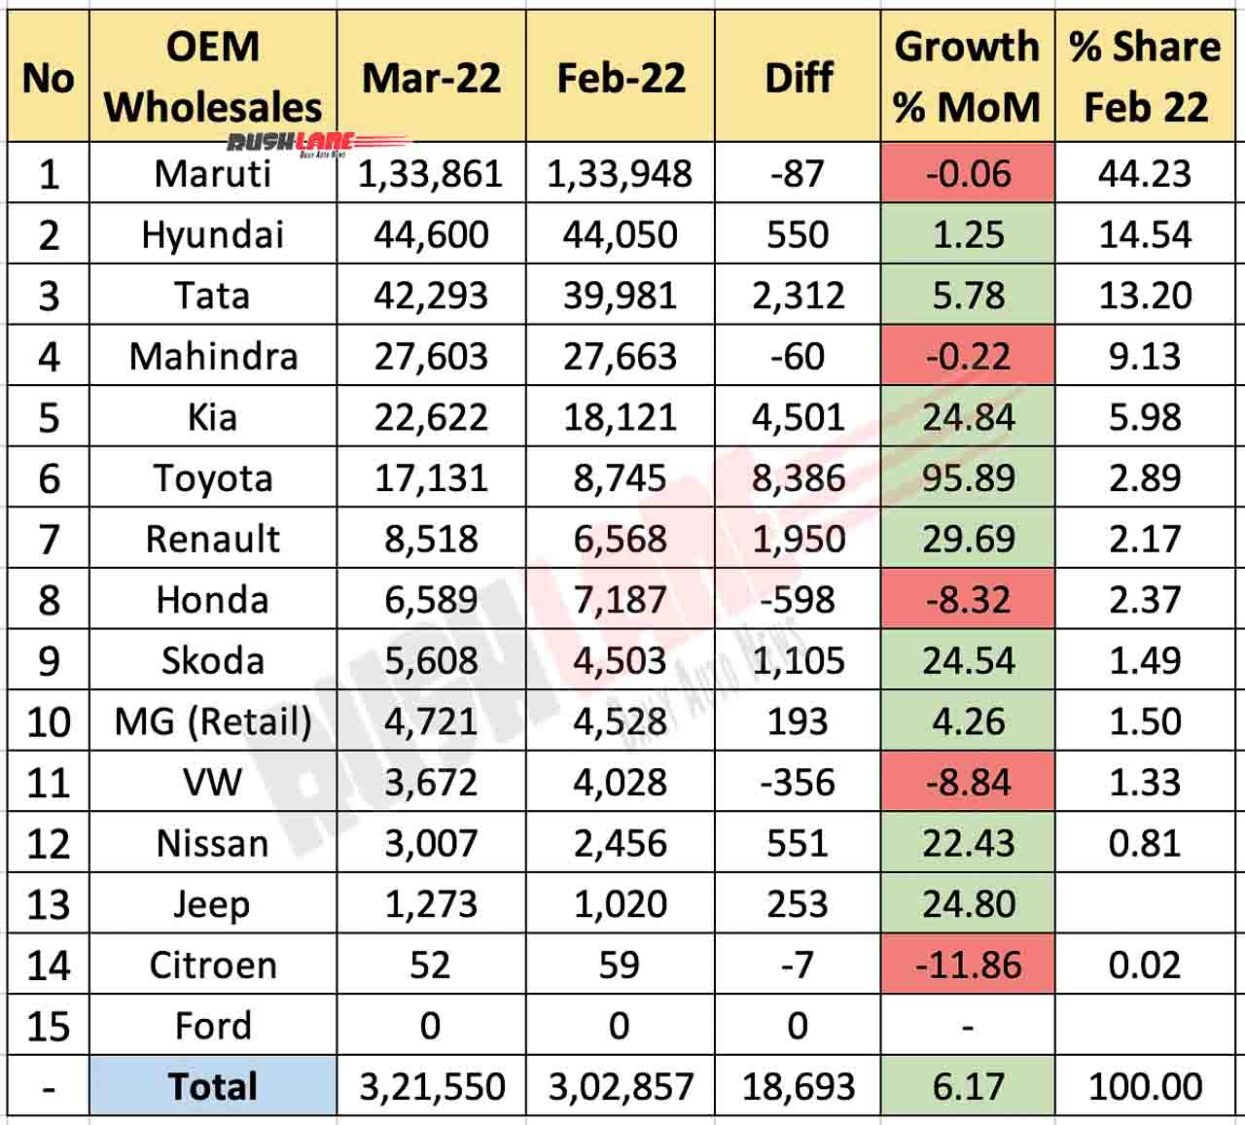 Car Sales March 2022 vs Feb 2022 (MoM)